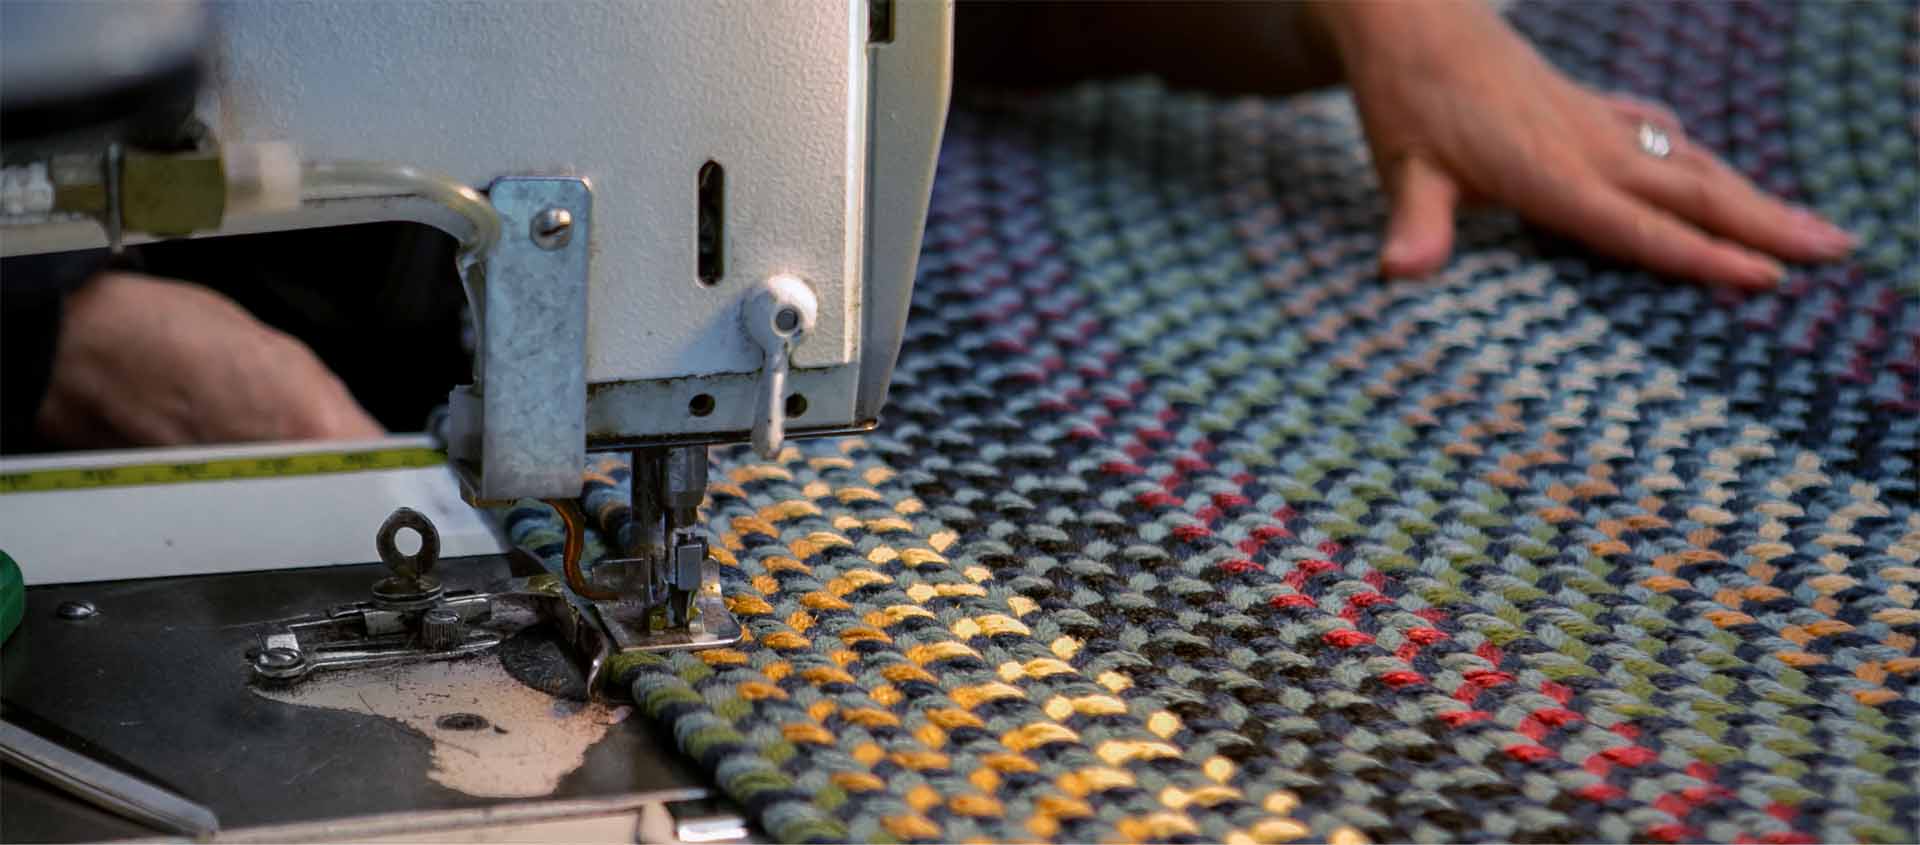 Braided Rugs being sewn on machine